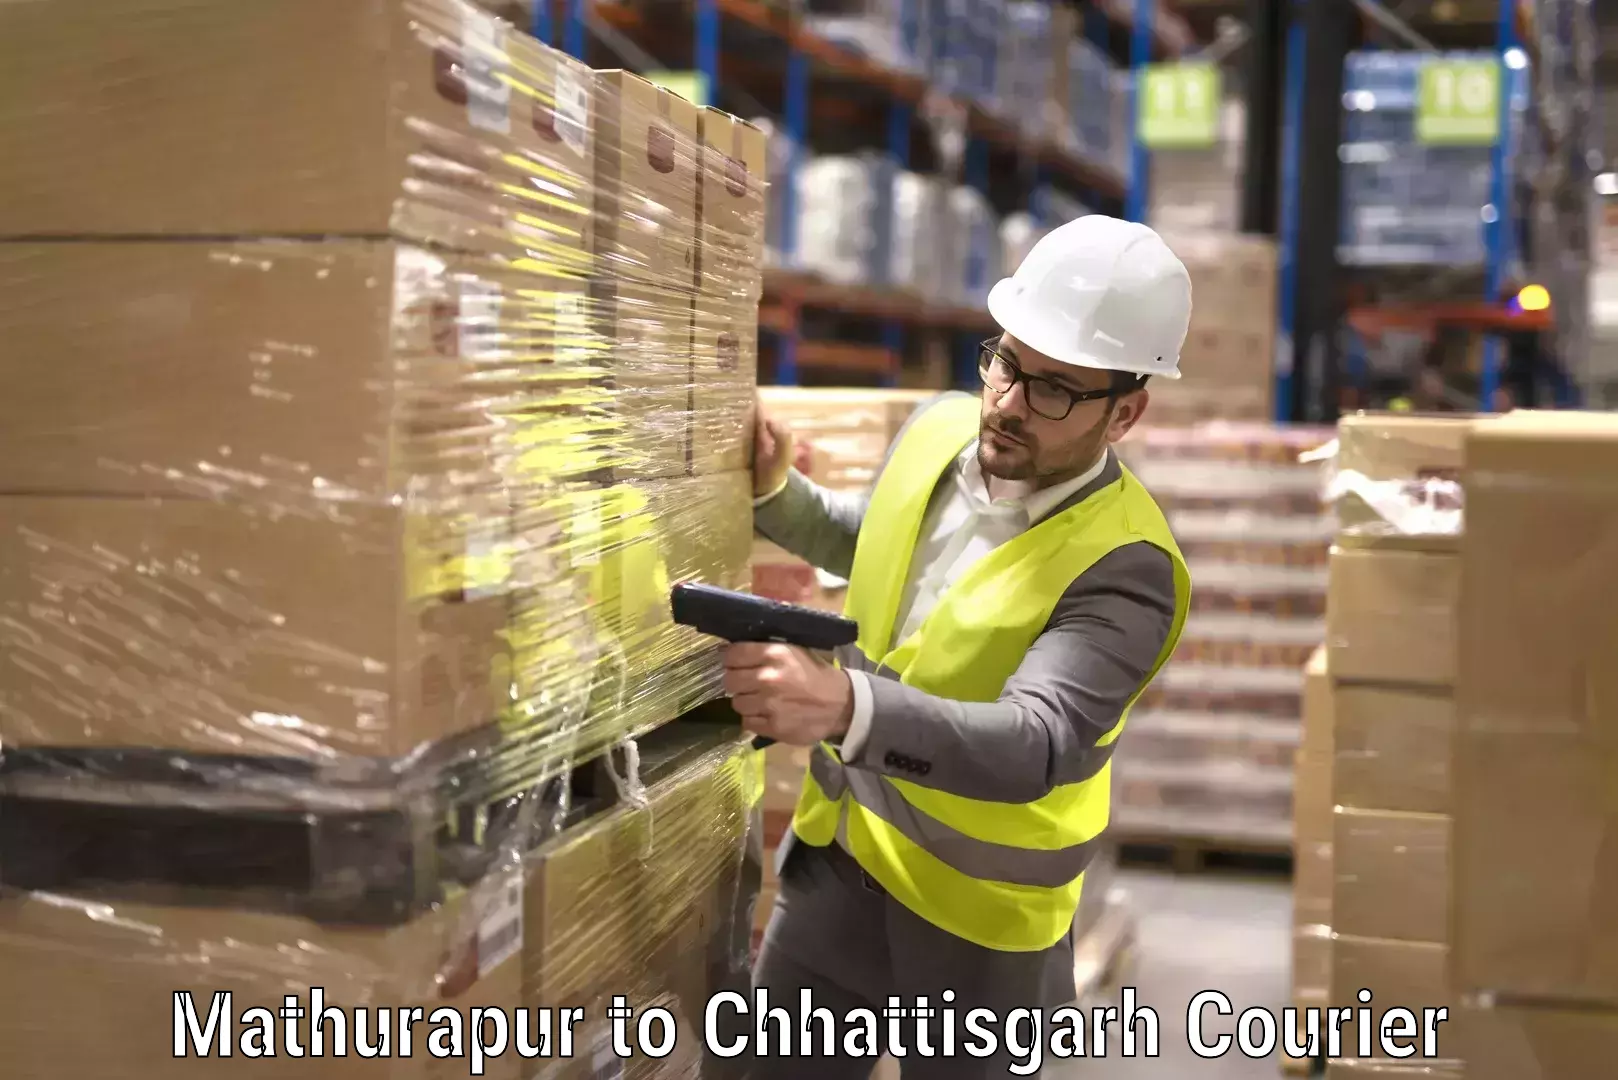 Furniture moving experts Mathurapur to Chhattisgarh